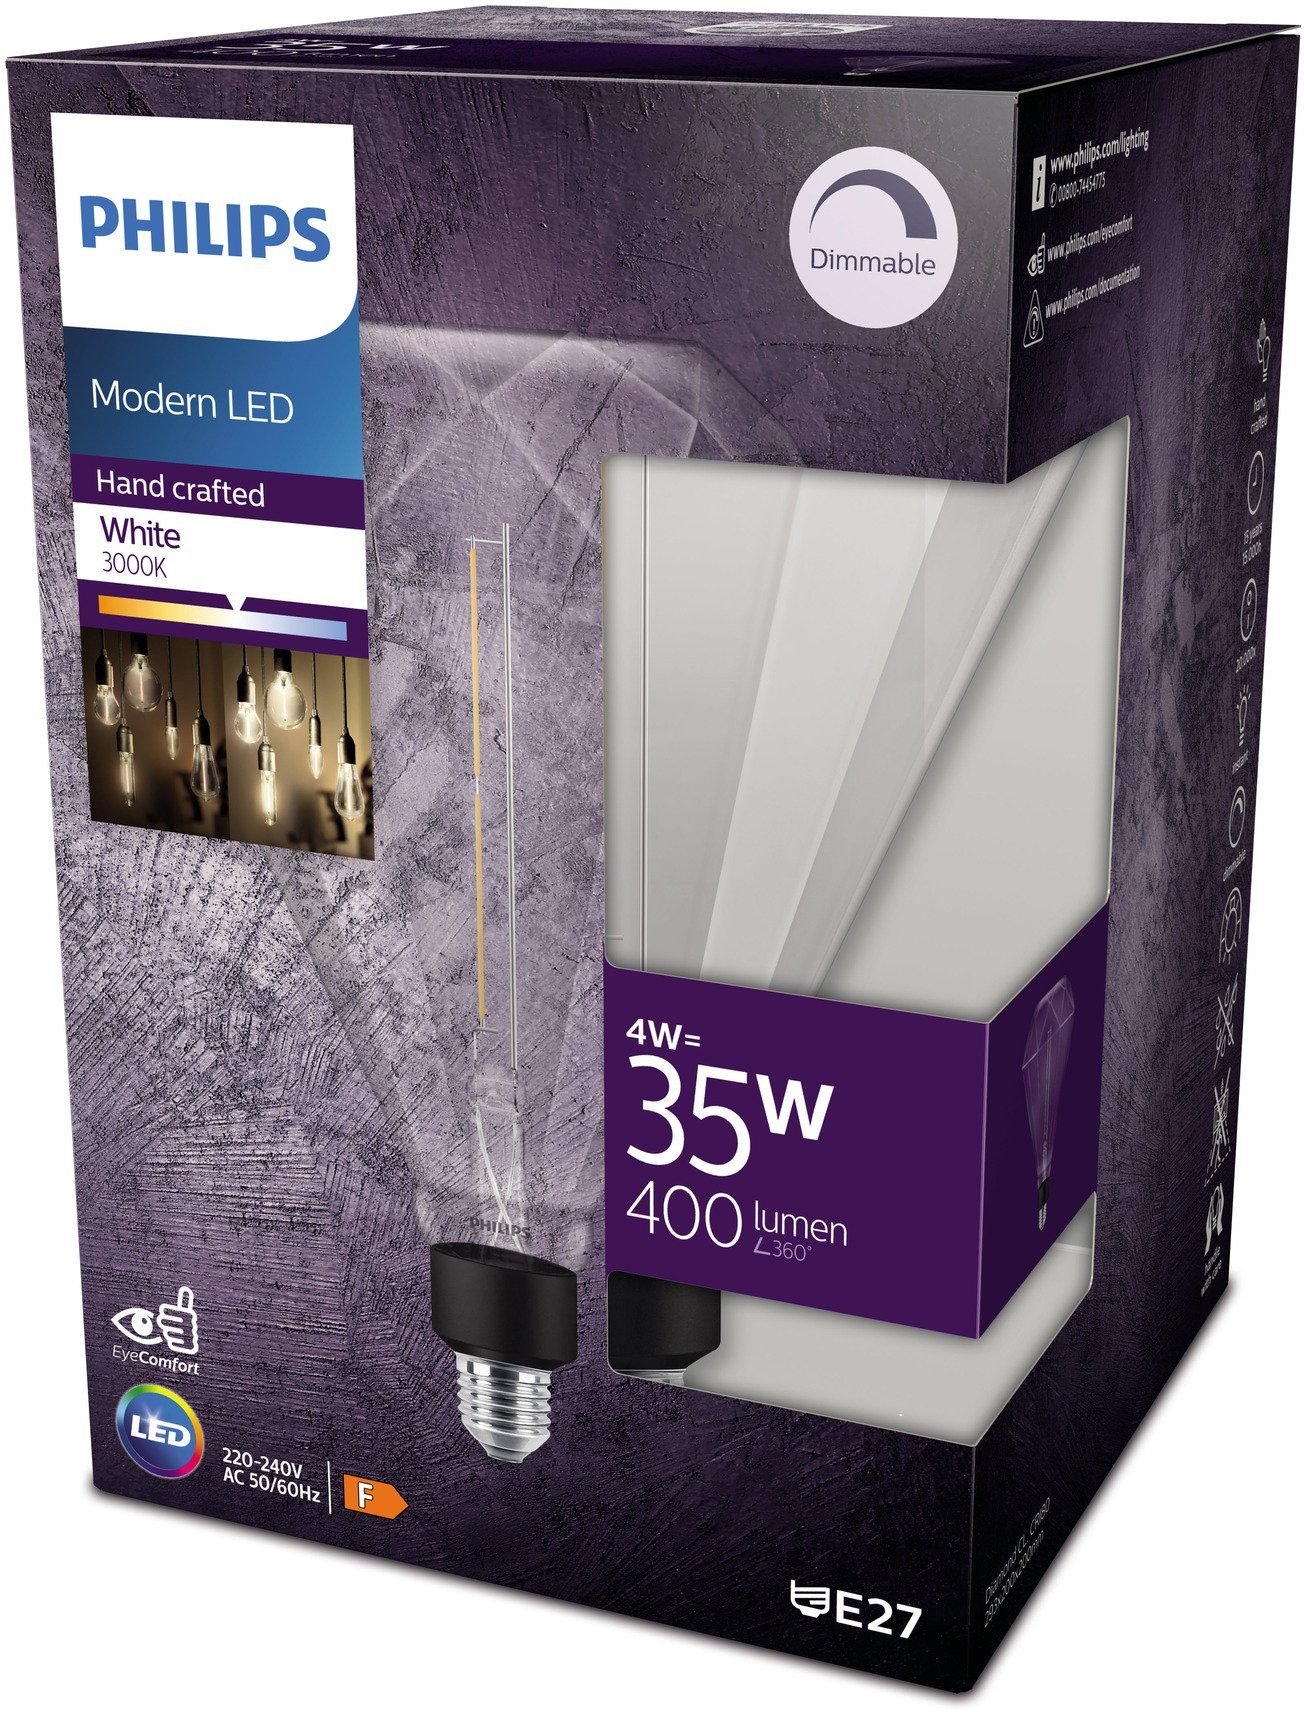 1er LED XL-35W E27 Diamond, klar St., Warmweiß Warmweiß, Lampe LED-Leuchtmittel dimmbar Philips 1 E27,